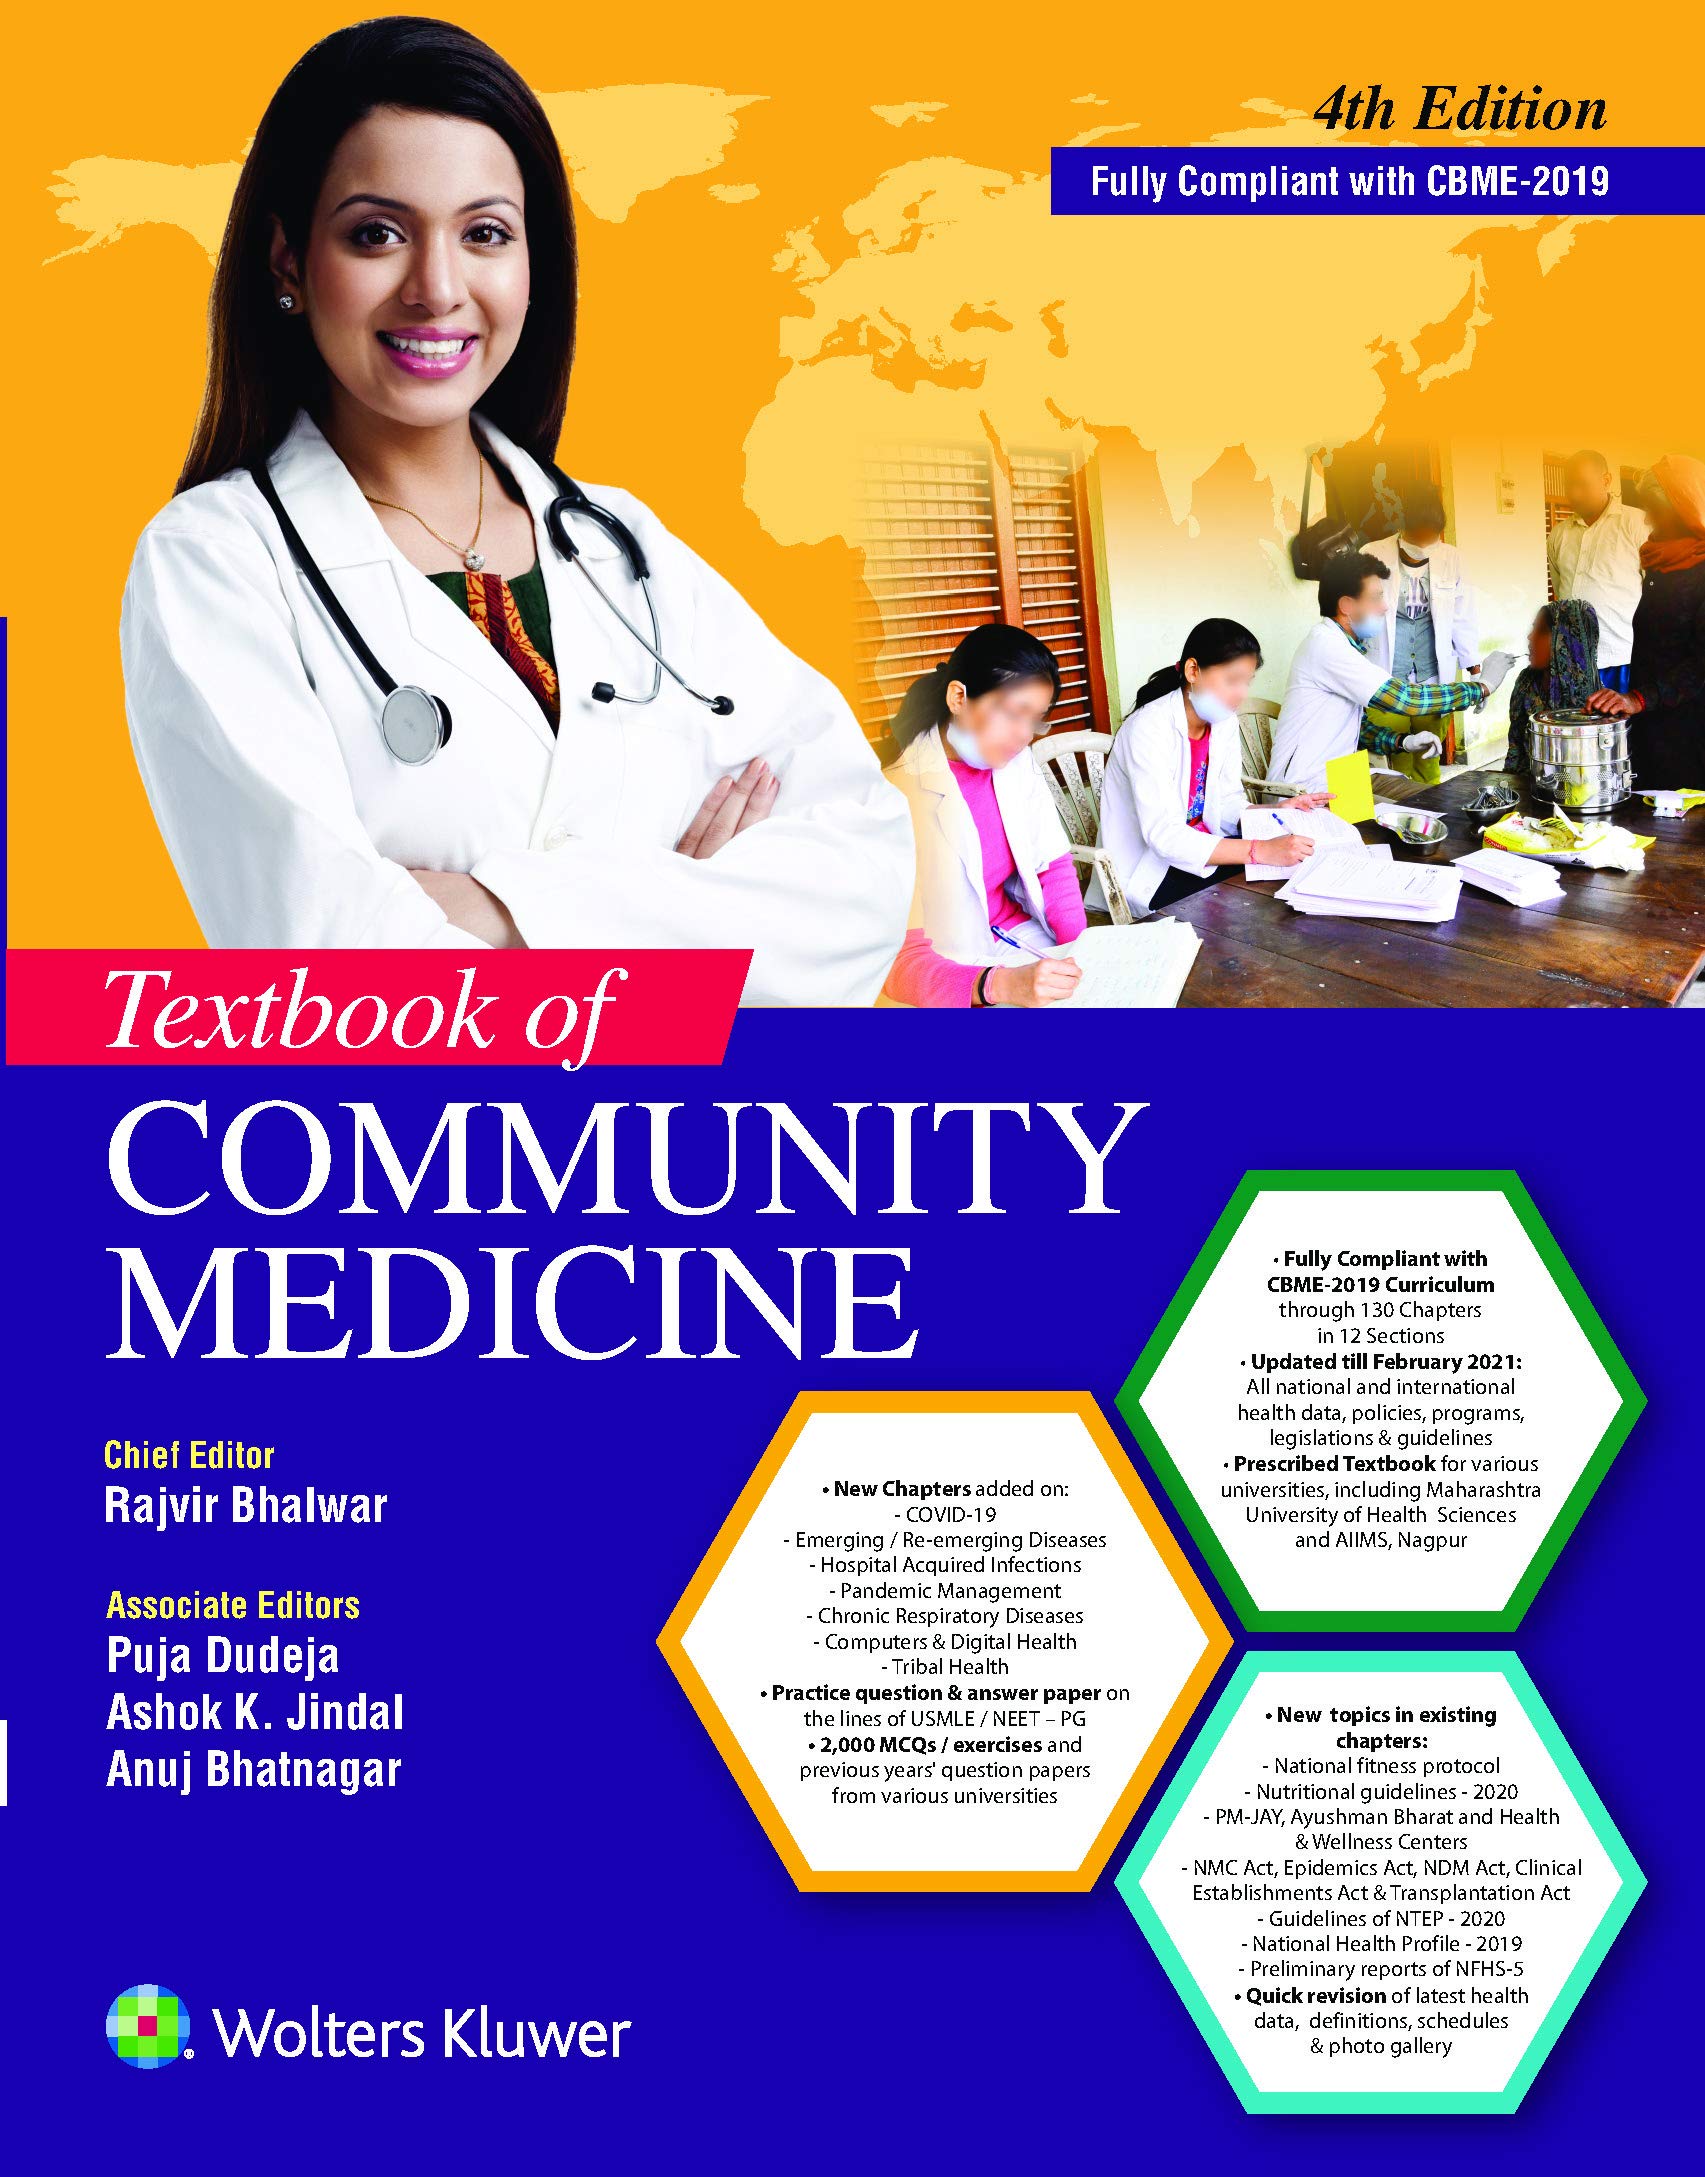 community medicine research topics in india